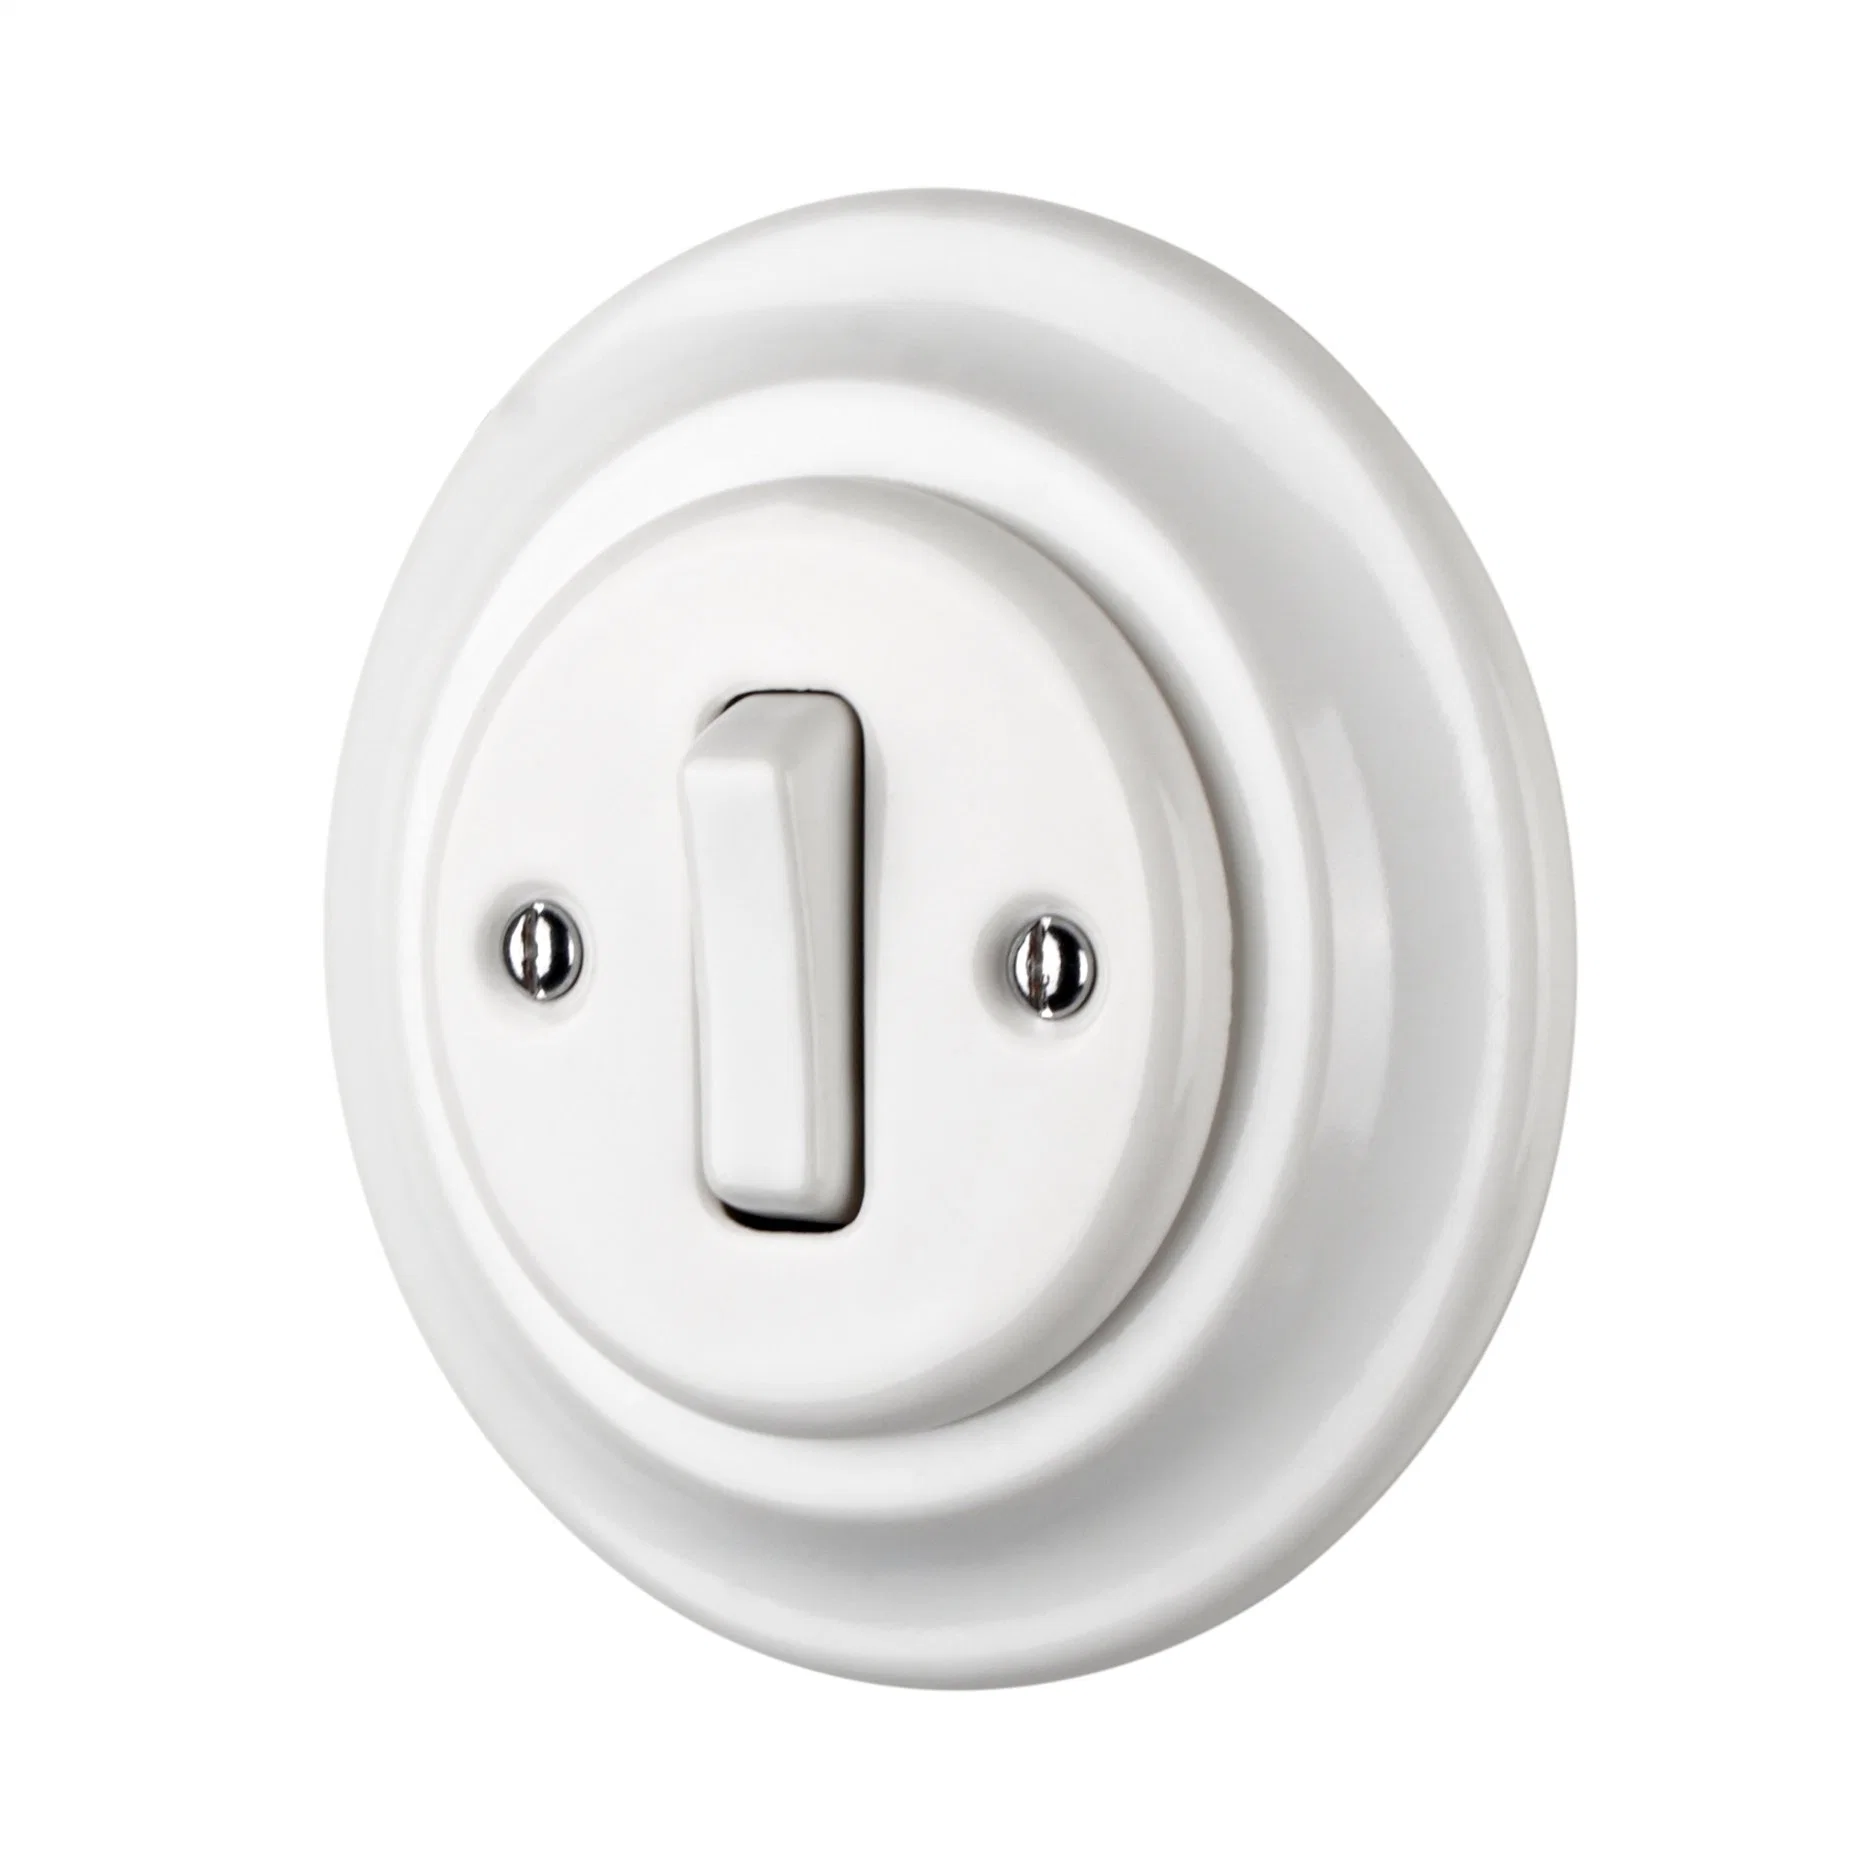 Convenient and Durable Intermediate Button Switch for Controlling Pendant Lights Keruida Ceramic